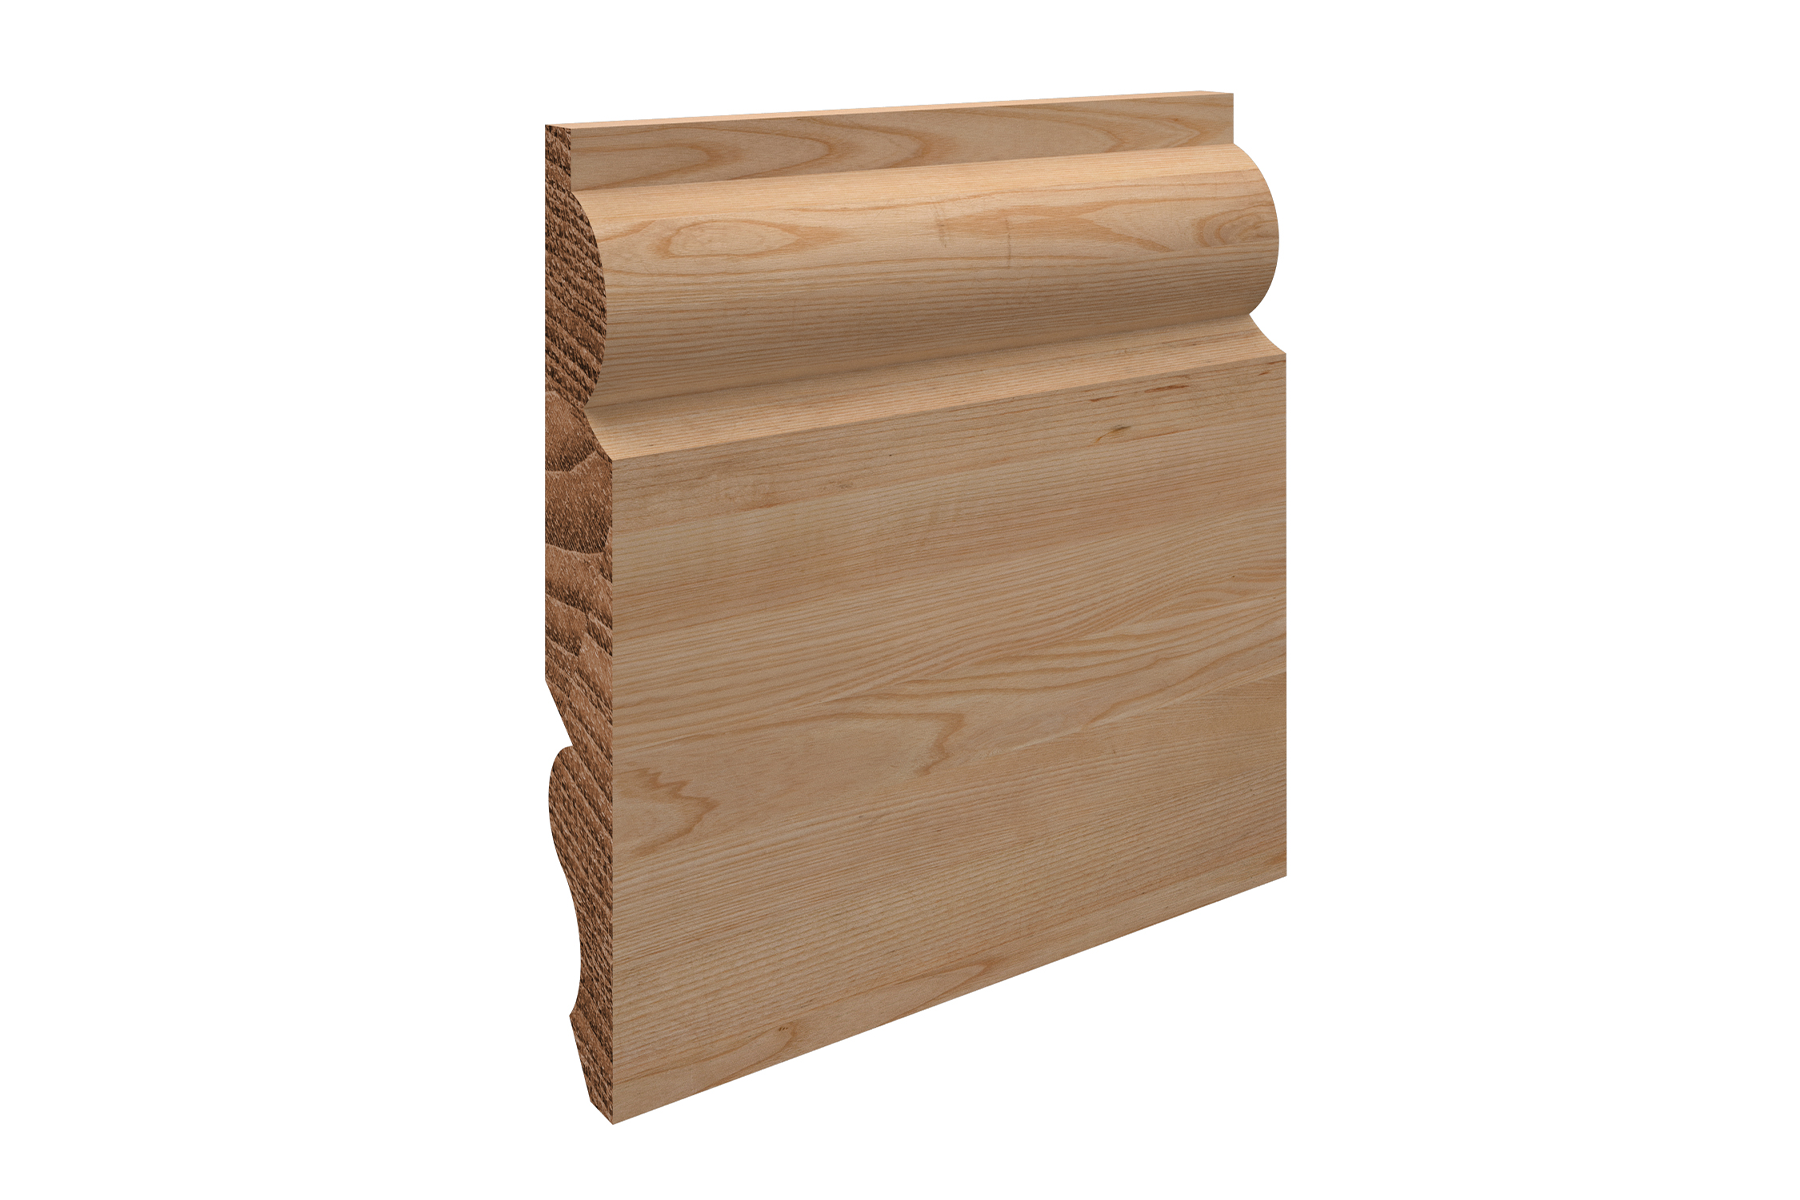 Timber, Joinery & Sheet Materials